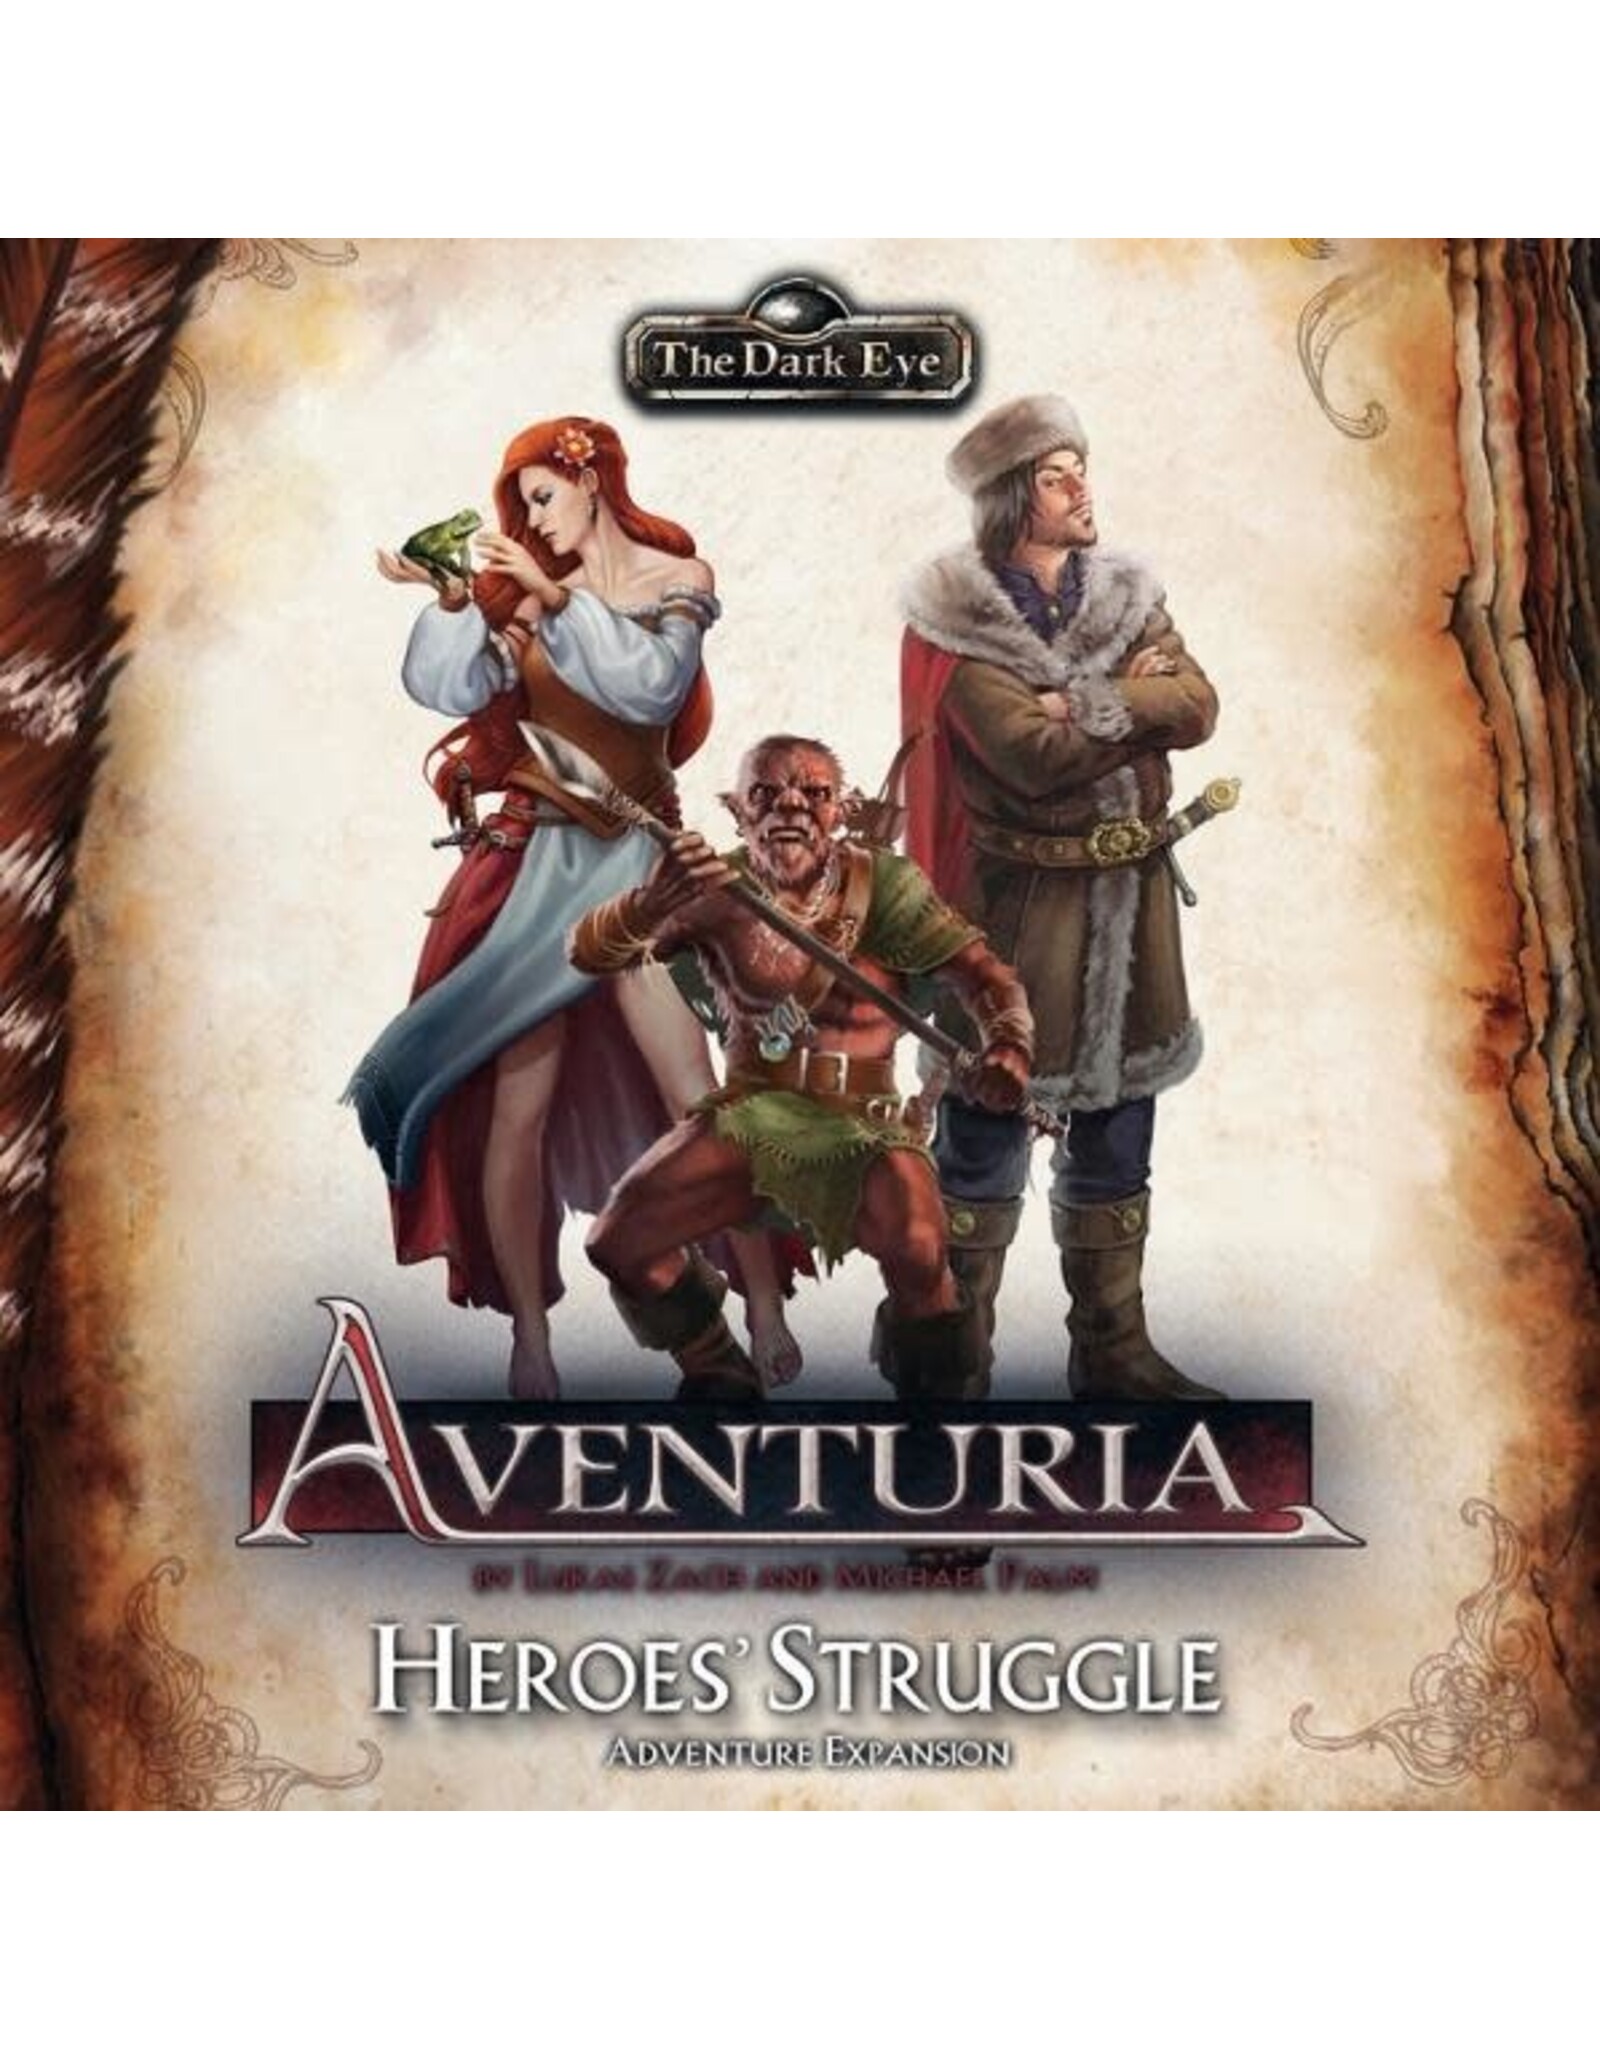 The Dark Eye: Aventuria Adventure Card Game - Heroes' Struggle Expansion